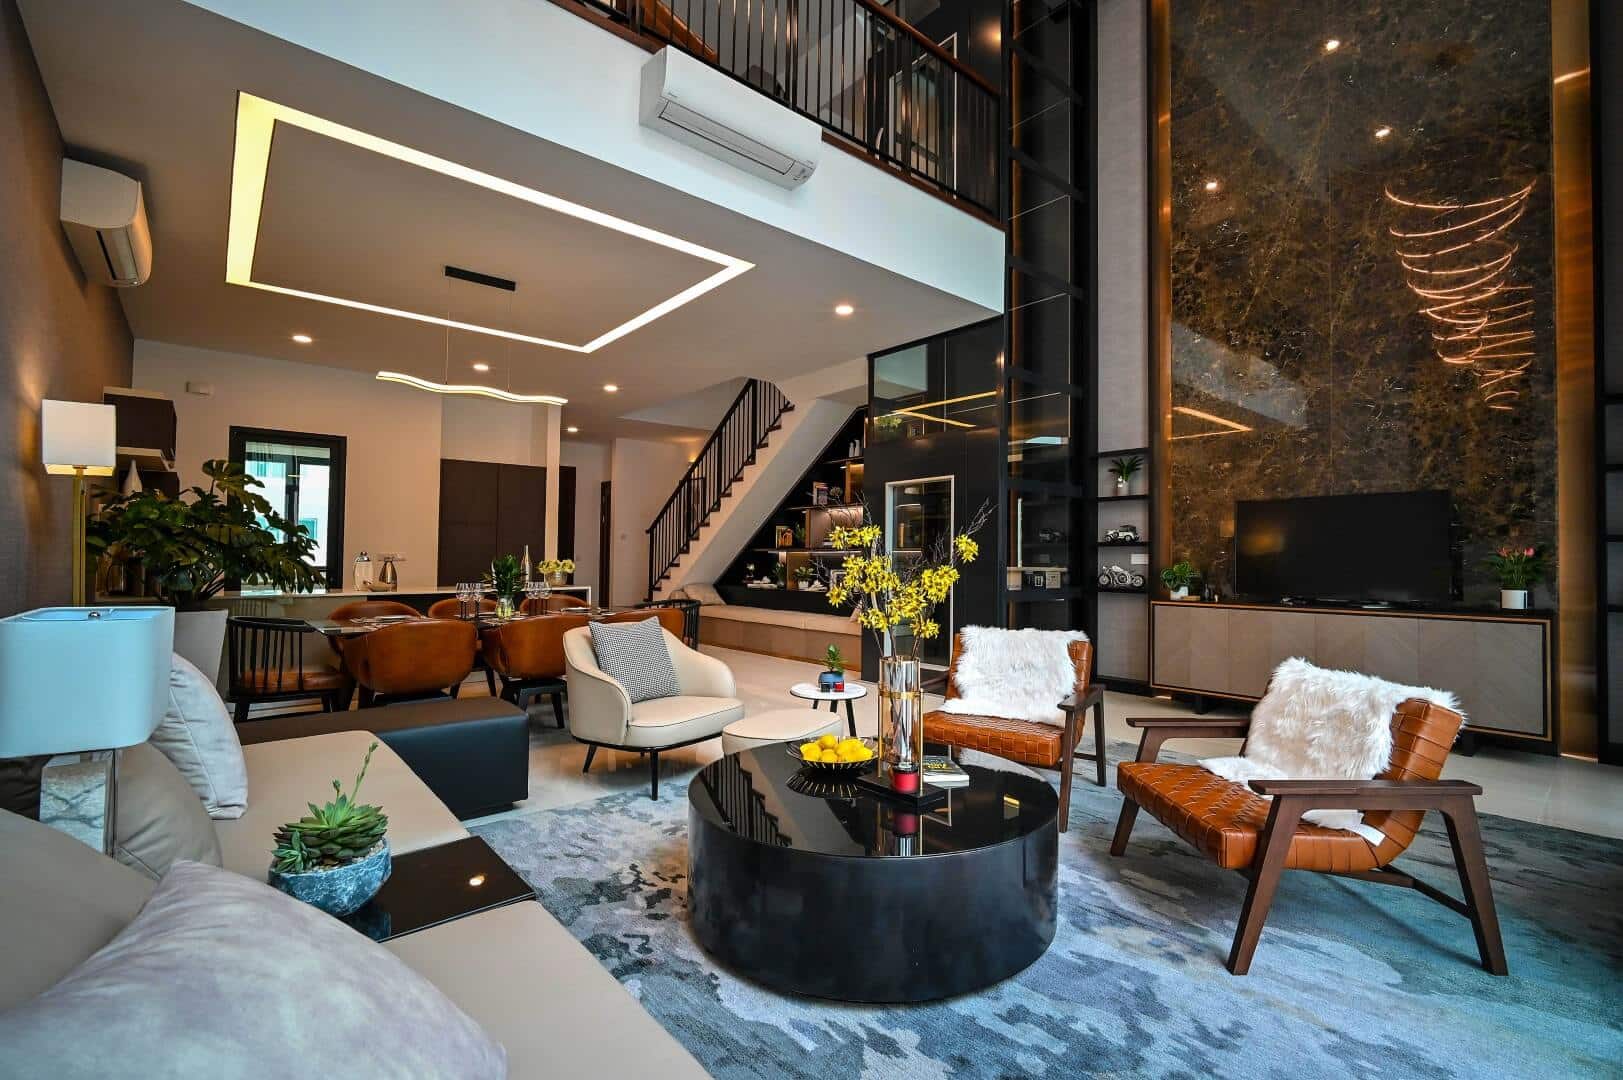 Classy, elegant and modern living room